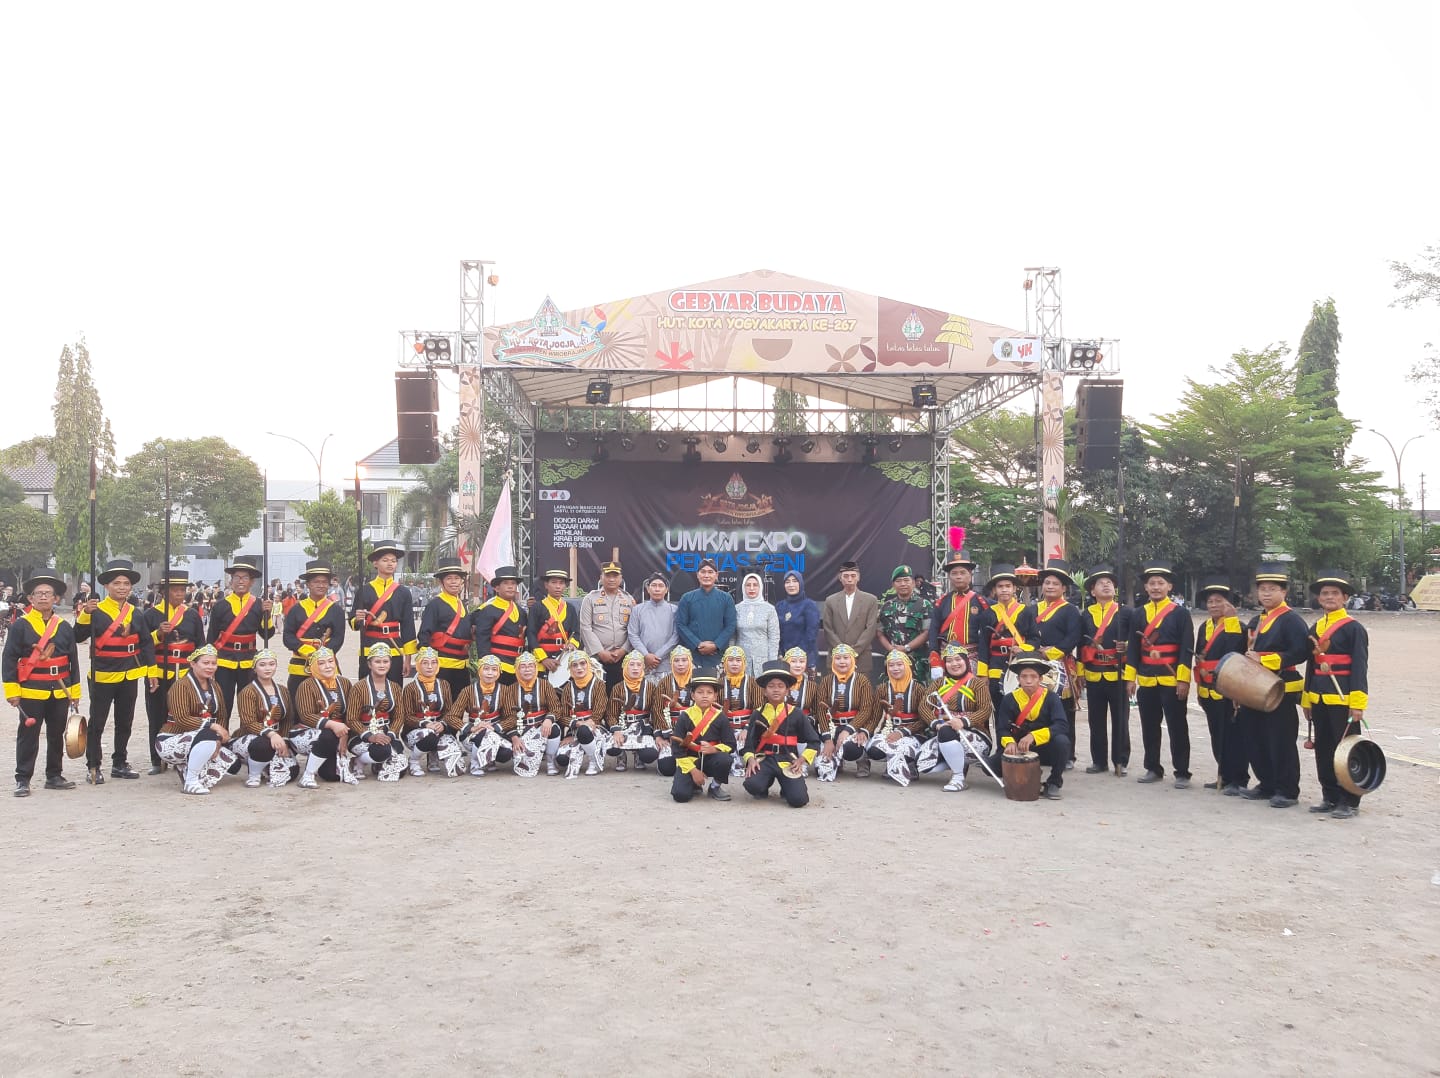 UMKM EXPO dan MALAM PENTAS SENI Kemantren Wirobrajan Dalam Rangka memperingati HUT Kota Yogyakarta yang ke 267